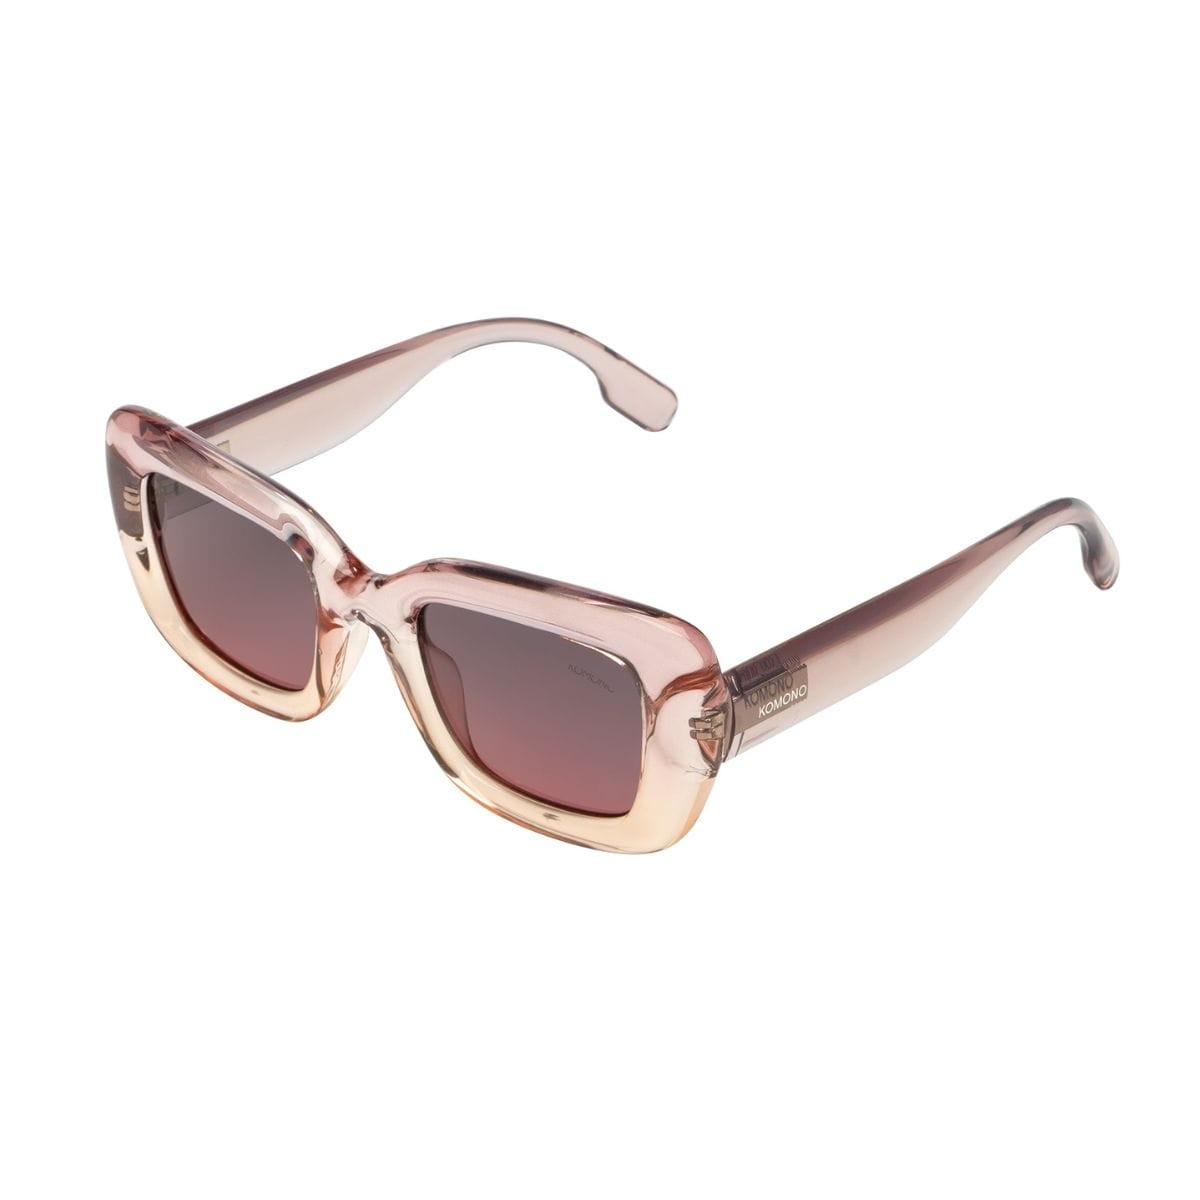 Komono - sunglasses - vita 6-12Y - blush